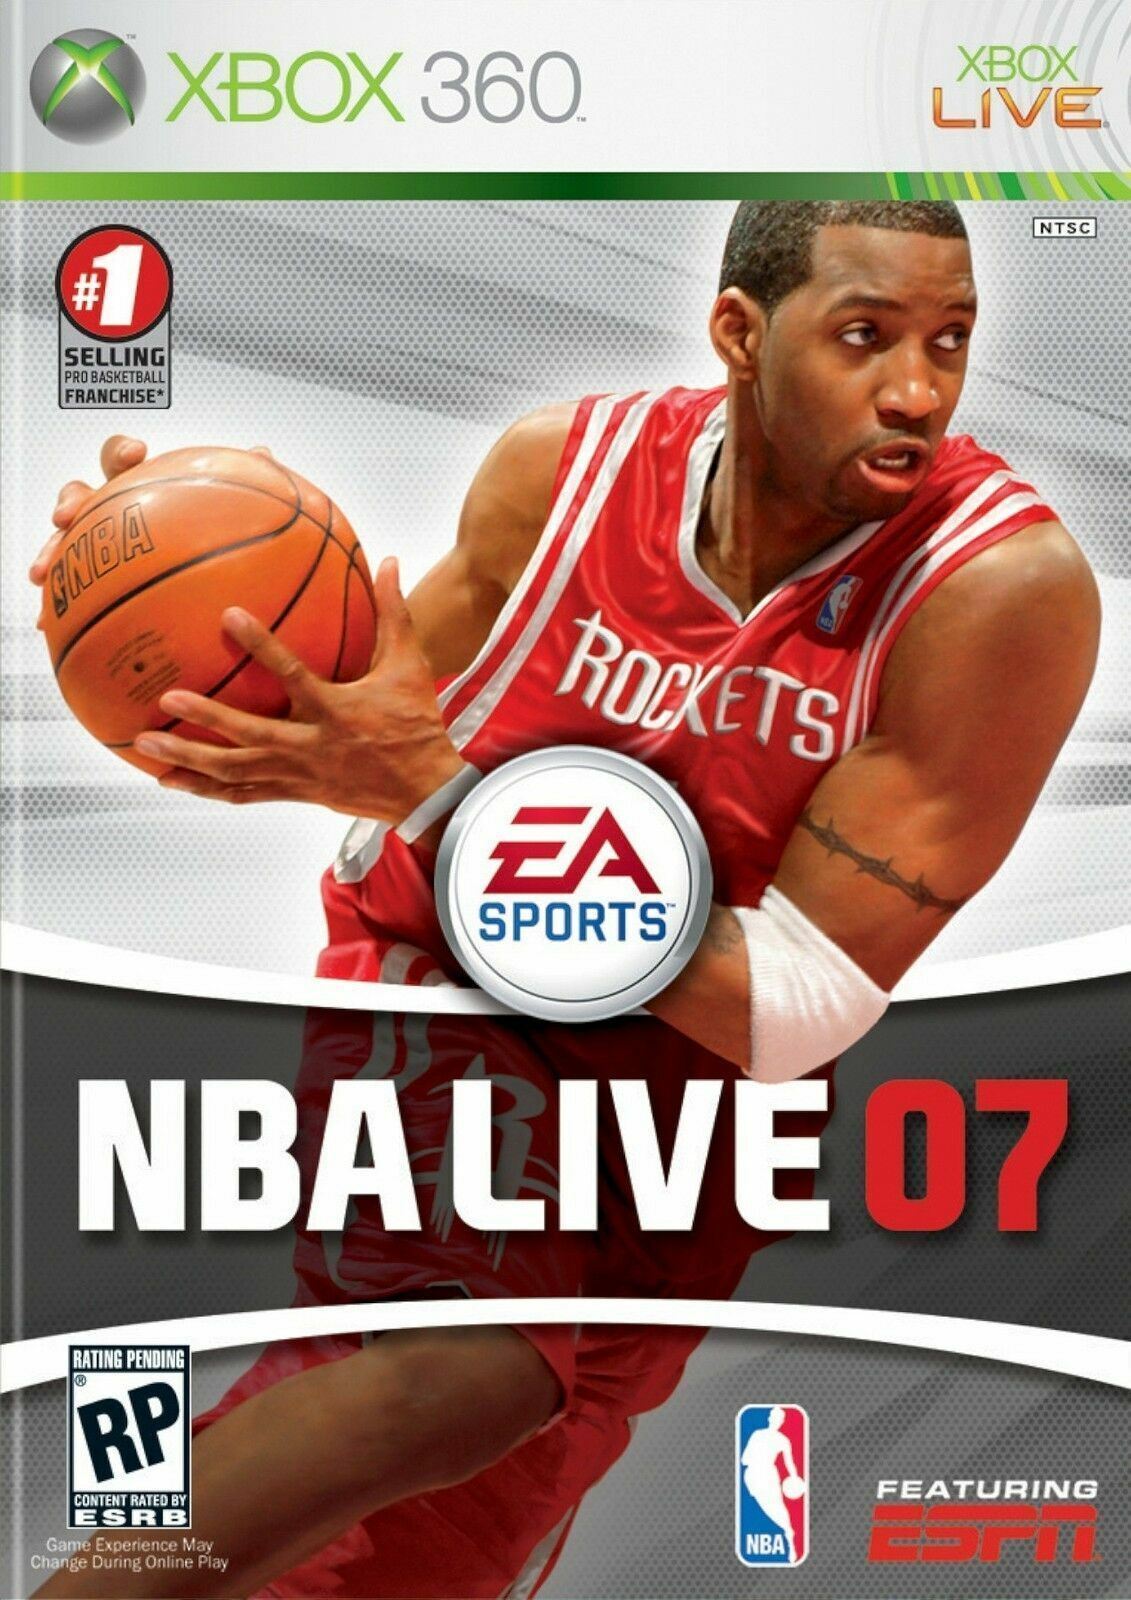 Primary image for XBOX 360 NBA Live 07 Video Game KOBE BRYANT Black Mamba Online Basketball 2007